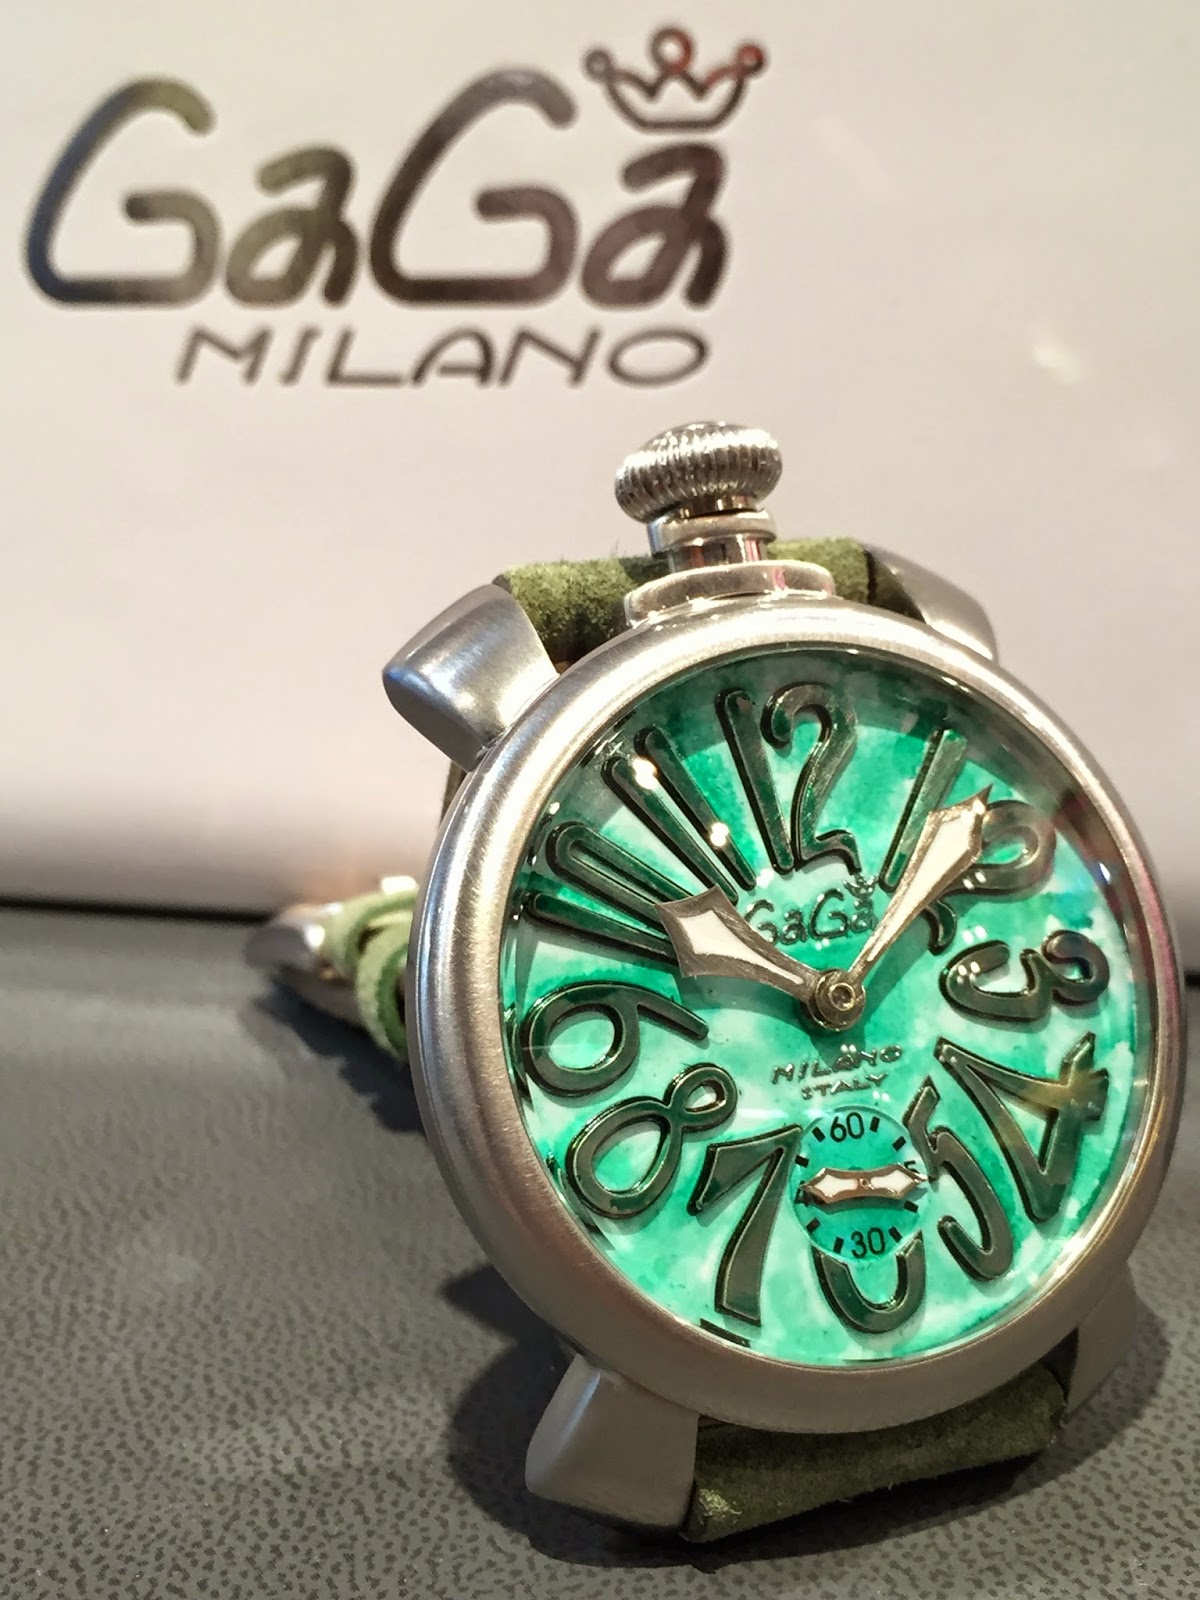 GaGa MILANO[ガガ ミラノ]春にオススメのグリーンな時計。 | LOUIS COLLECTION 福岡キャナルシティOPA